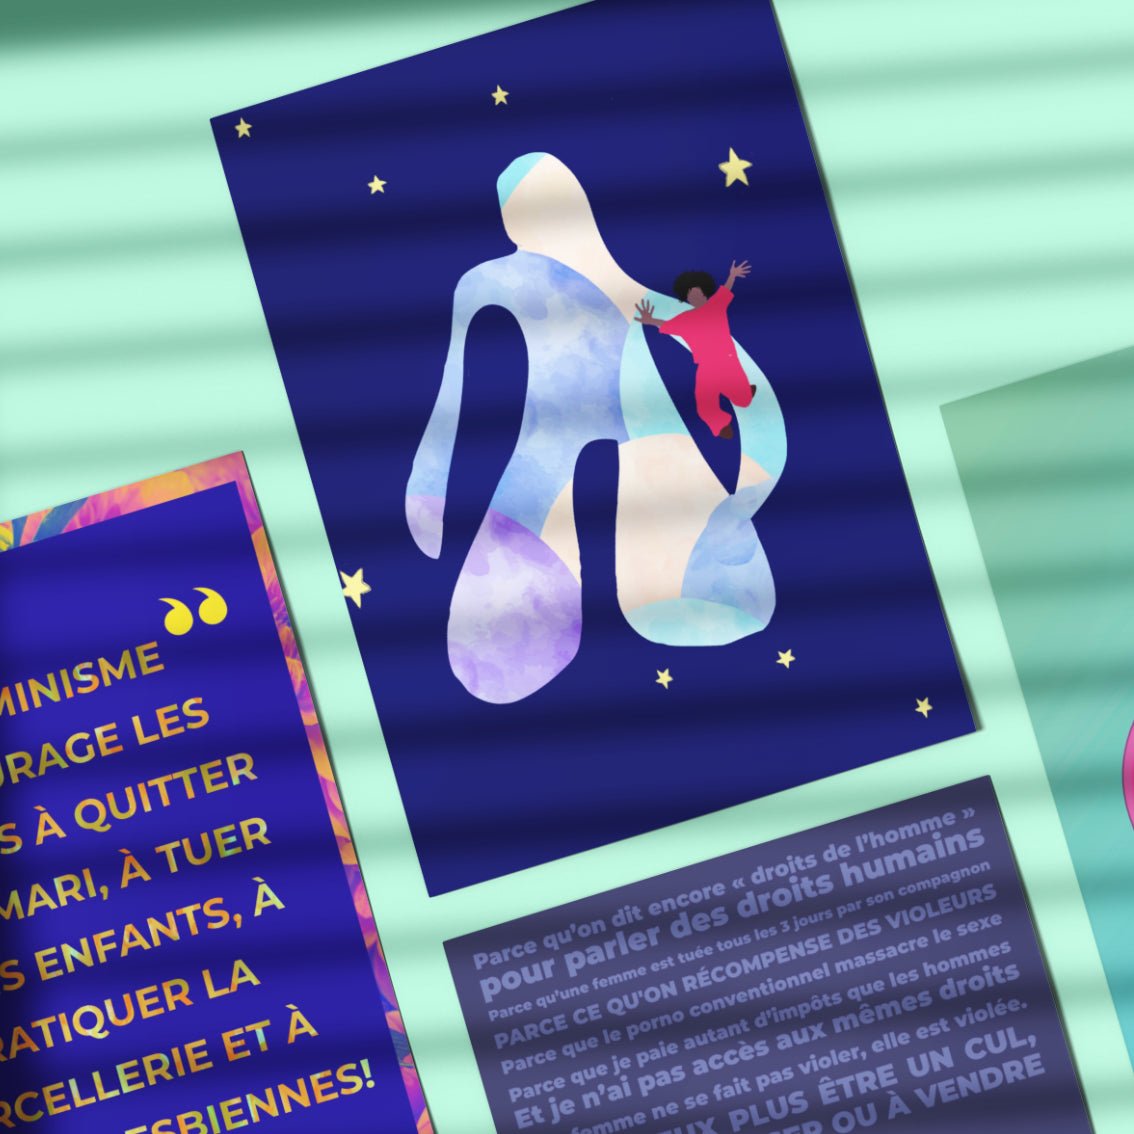 8 cartes magiques du Gang du clito - Punchlines féministes - Gang du Clito